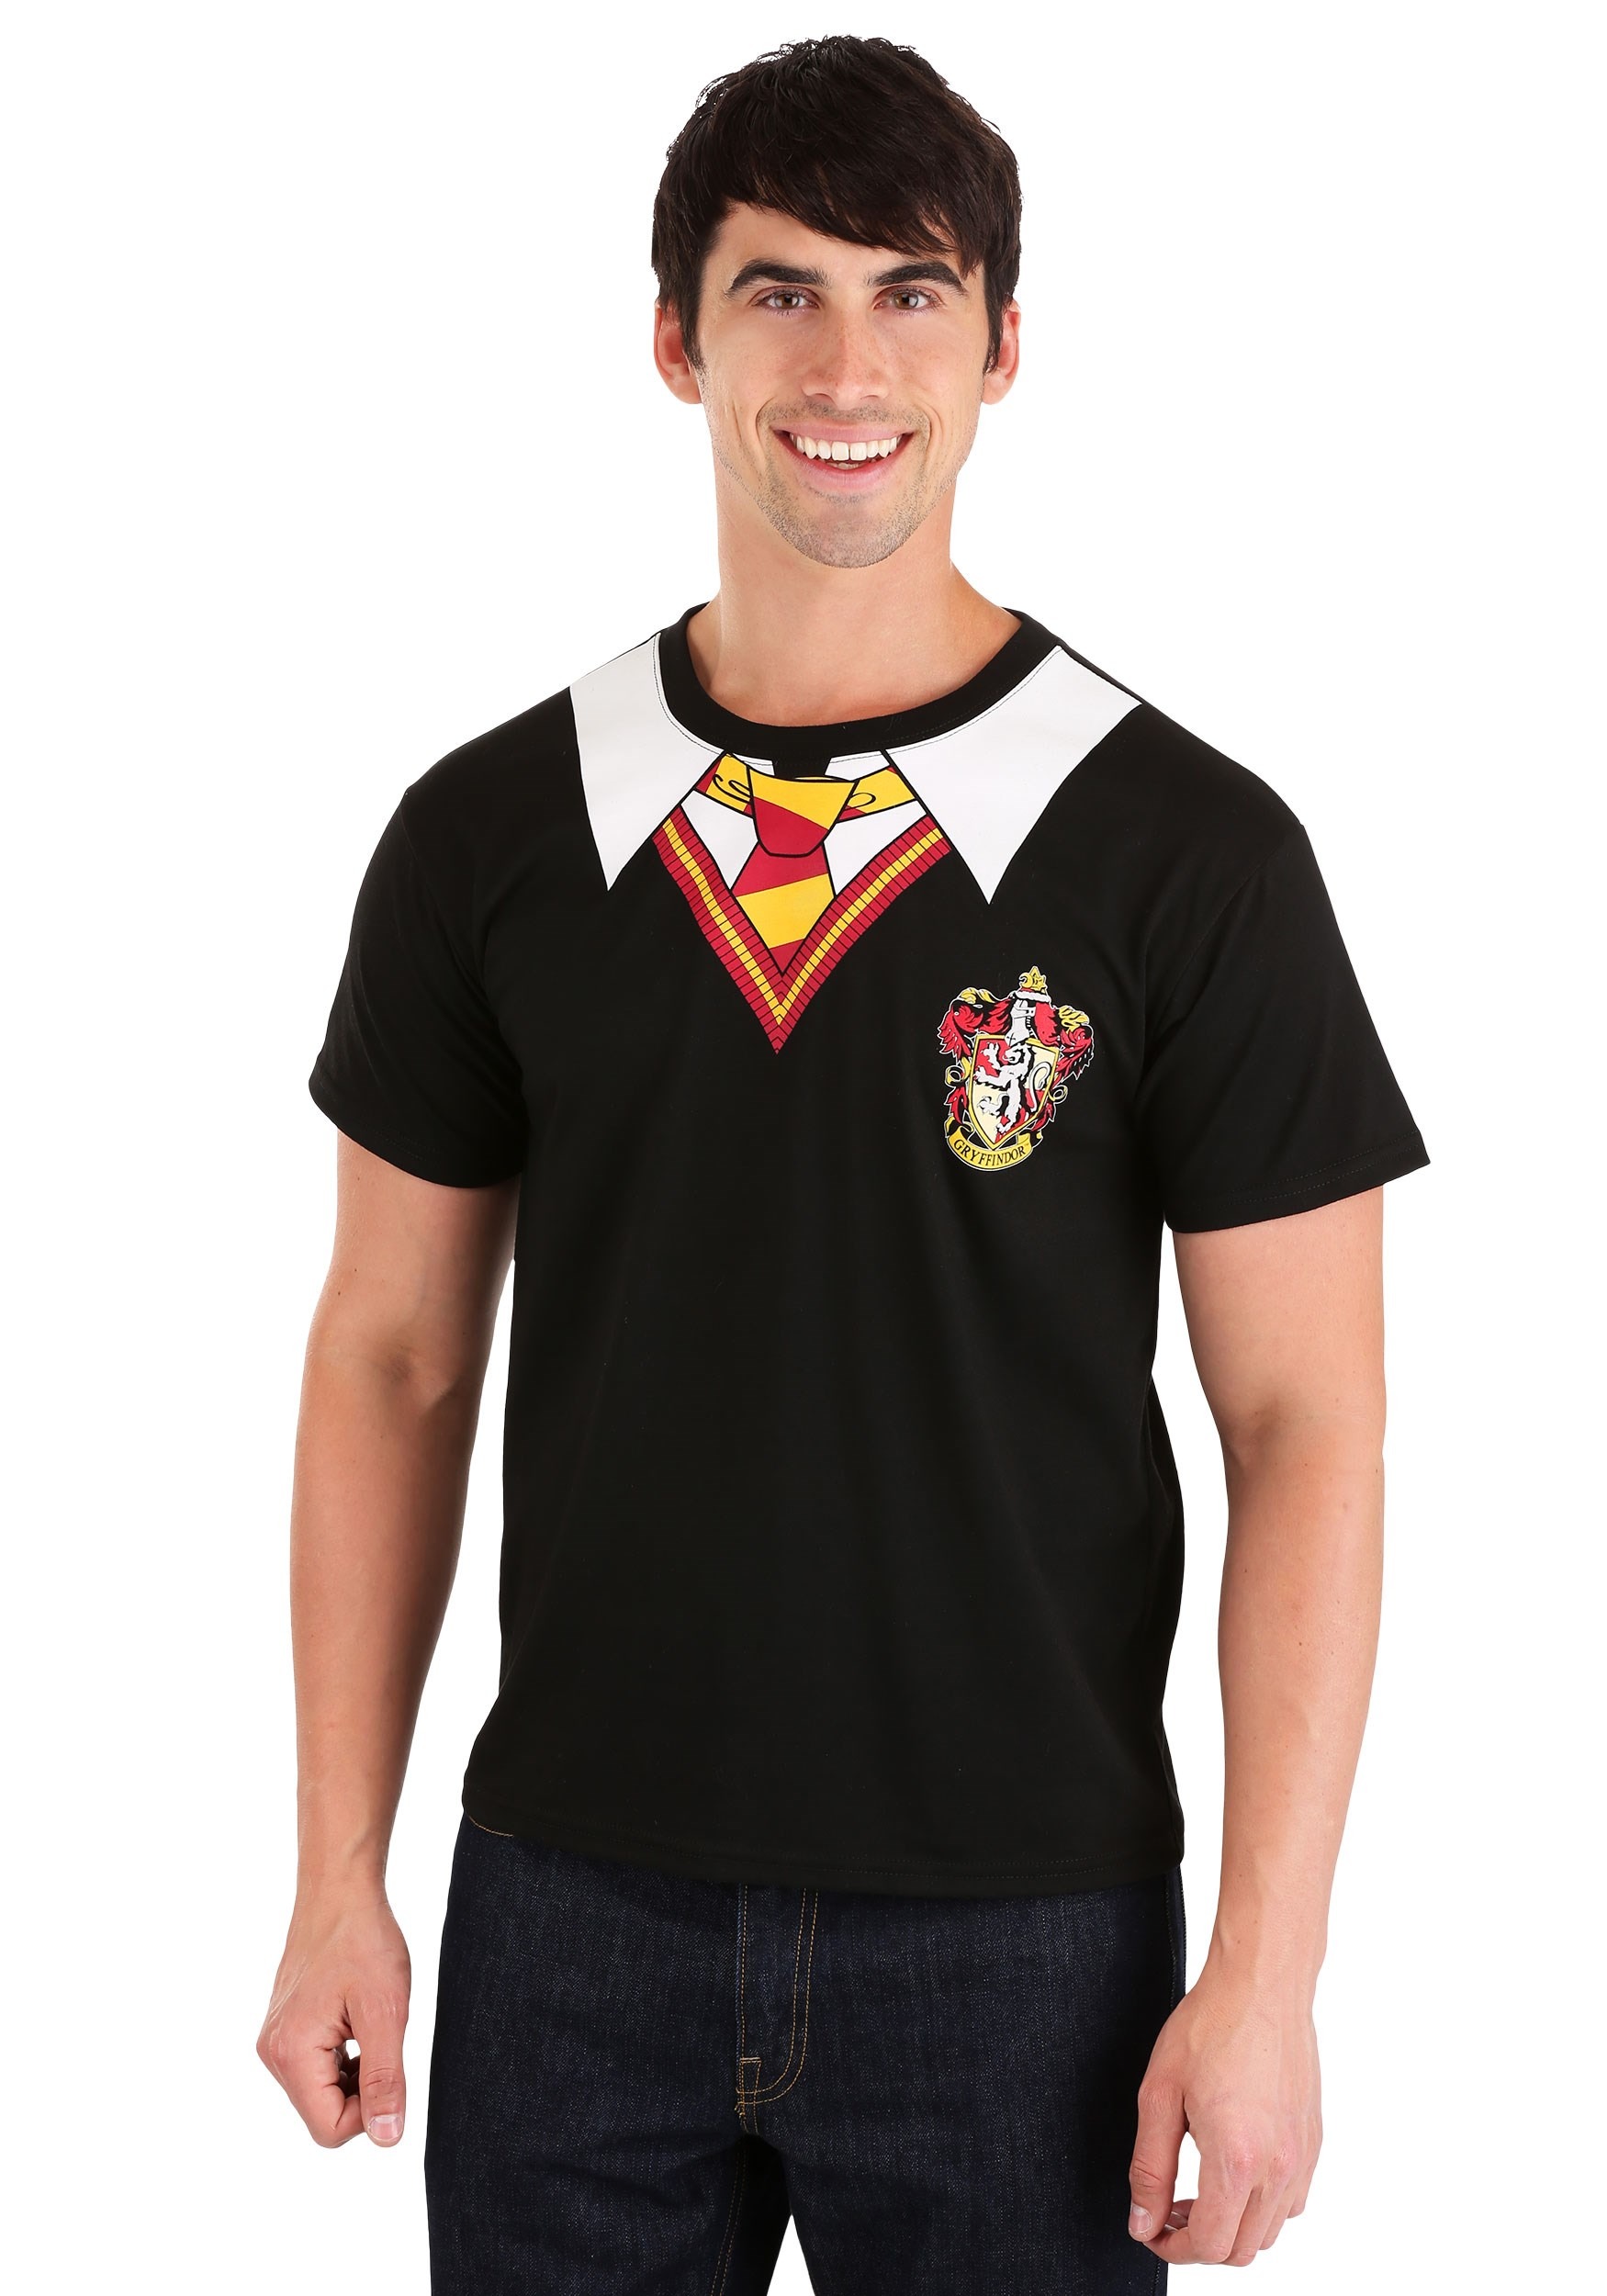 Shop Now For The Plus Size Harry Potter Gryffindor Costume T Shirt Fandom Shop - roblox harry potter shirt